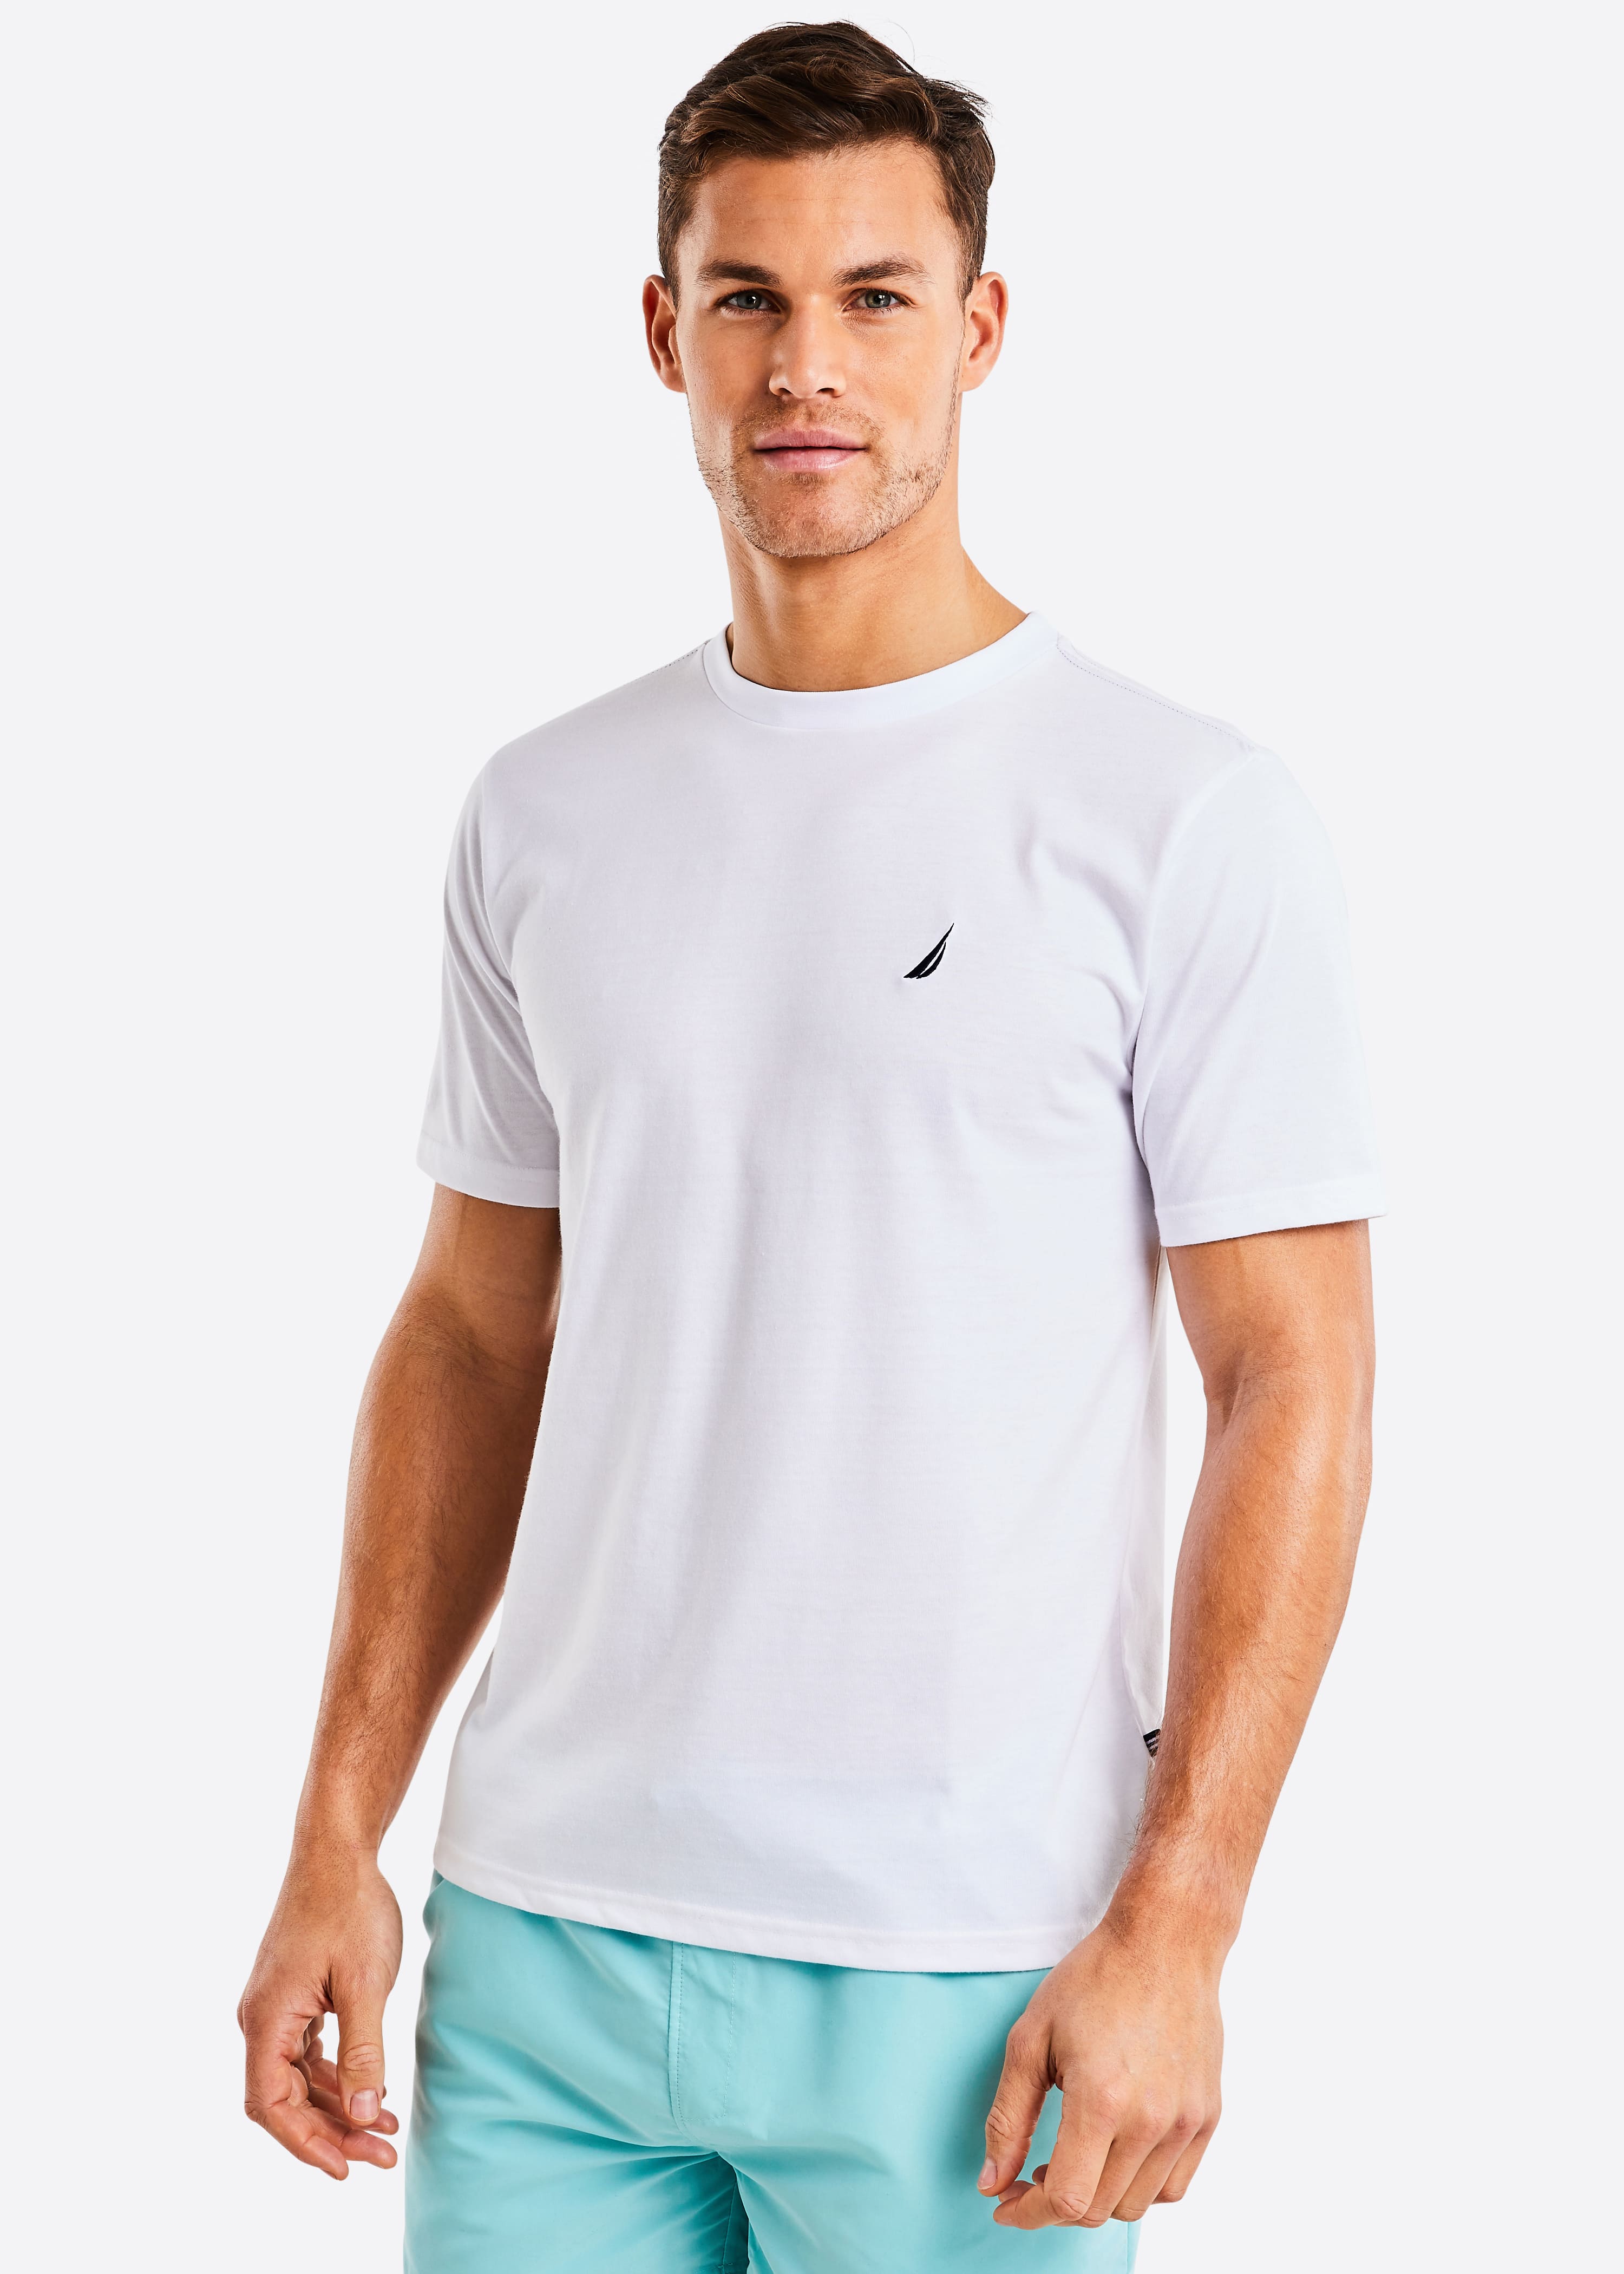 Nautica Bowen T-Shirt - White - Front